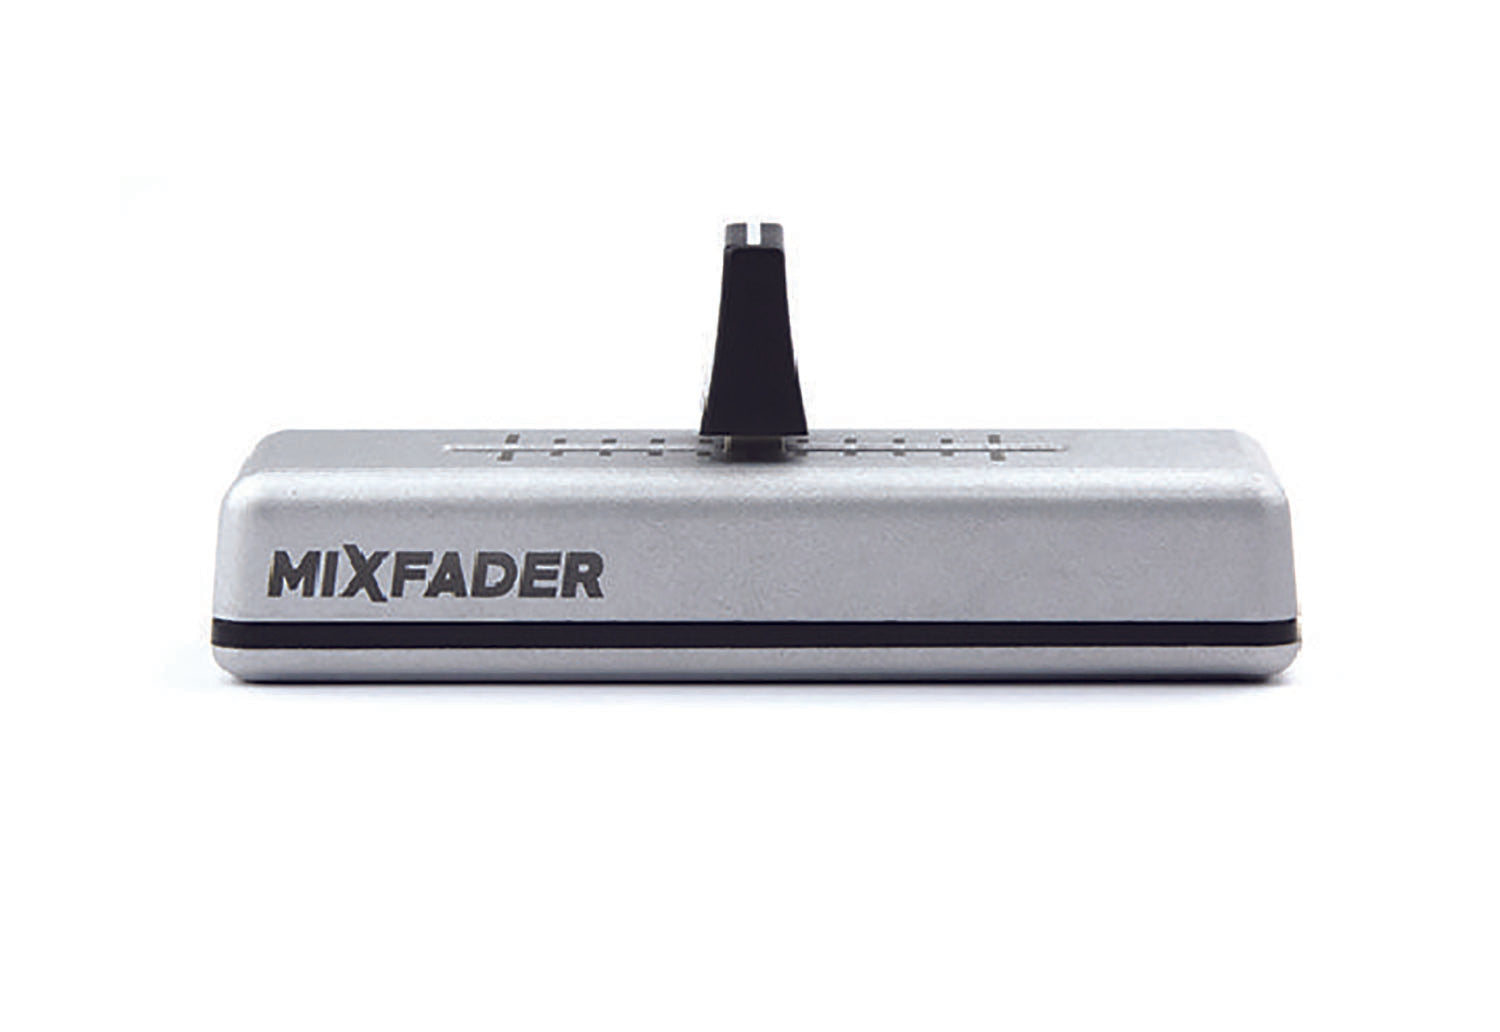 B-Stock: MWM Mixfader Wireless Portable Fader by Mixfader